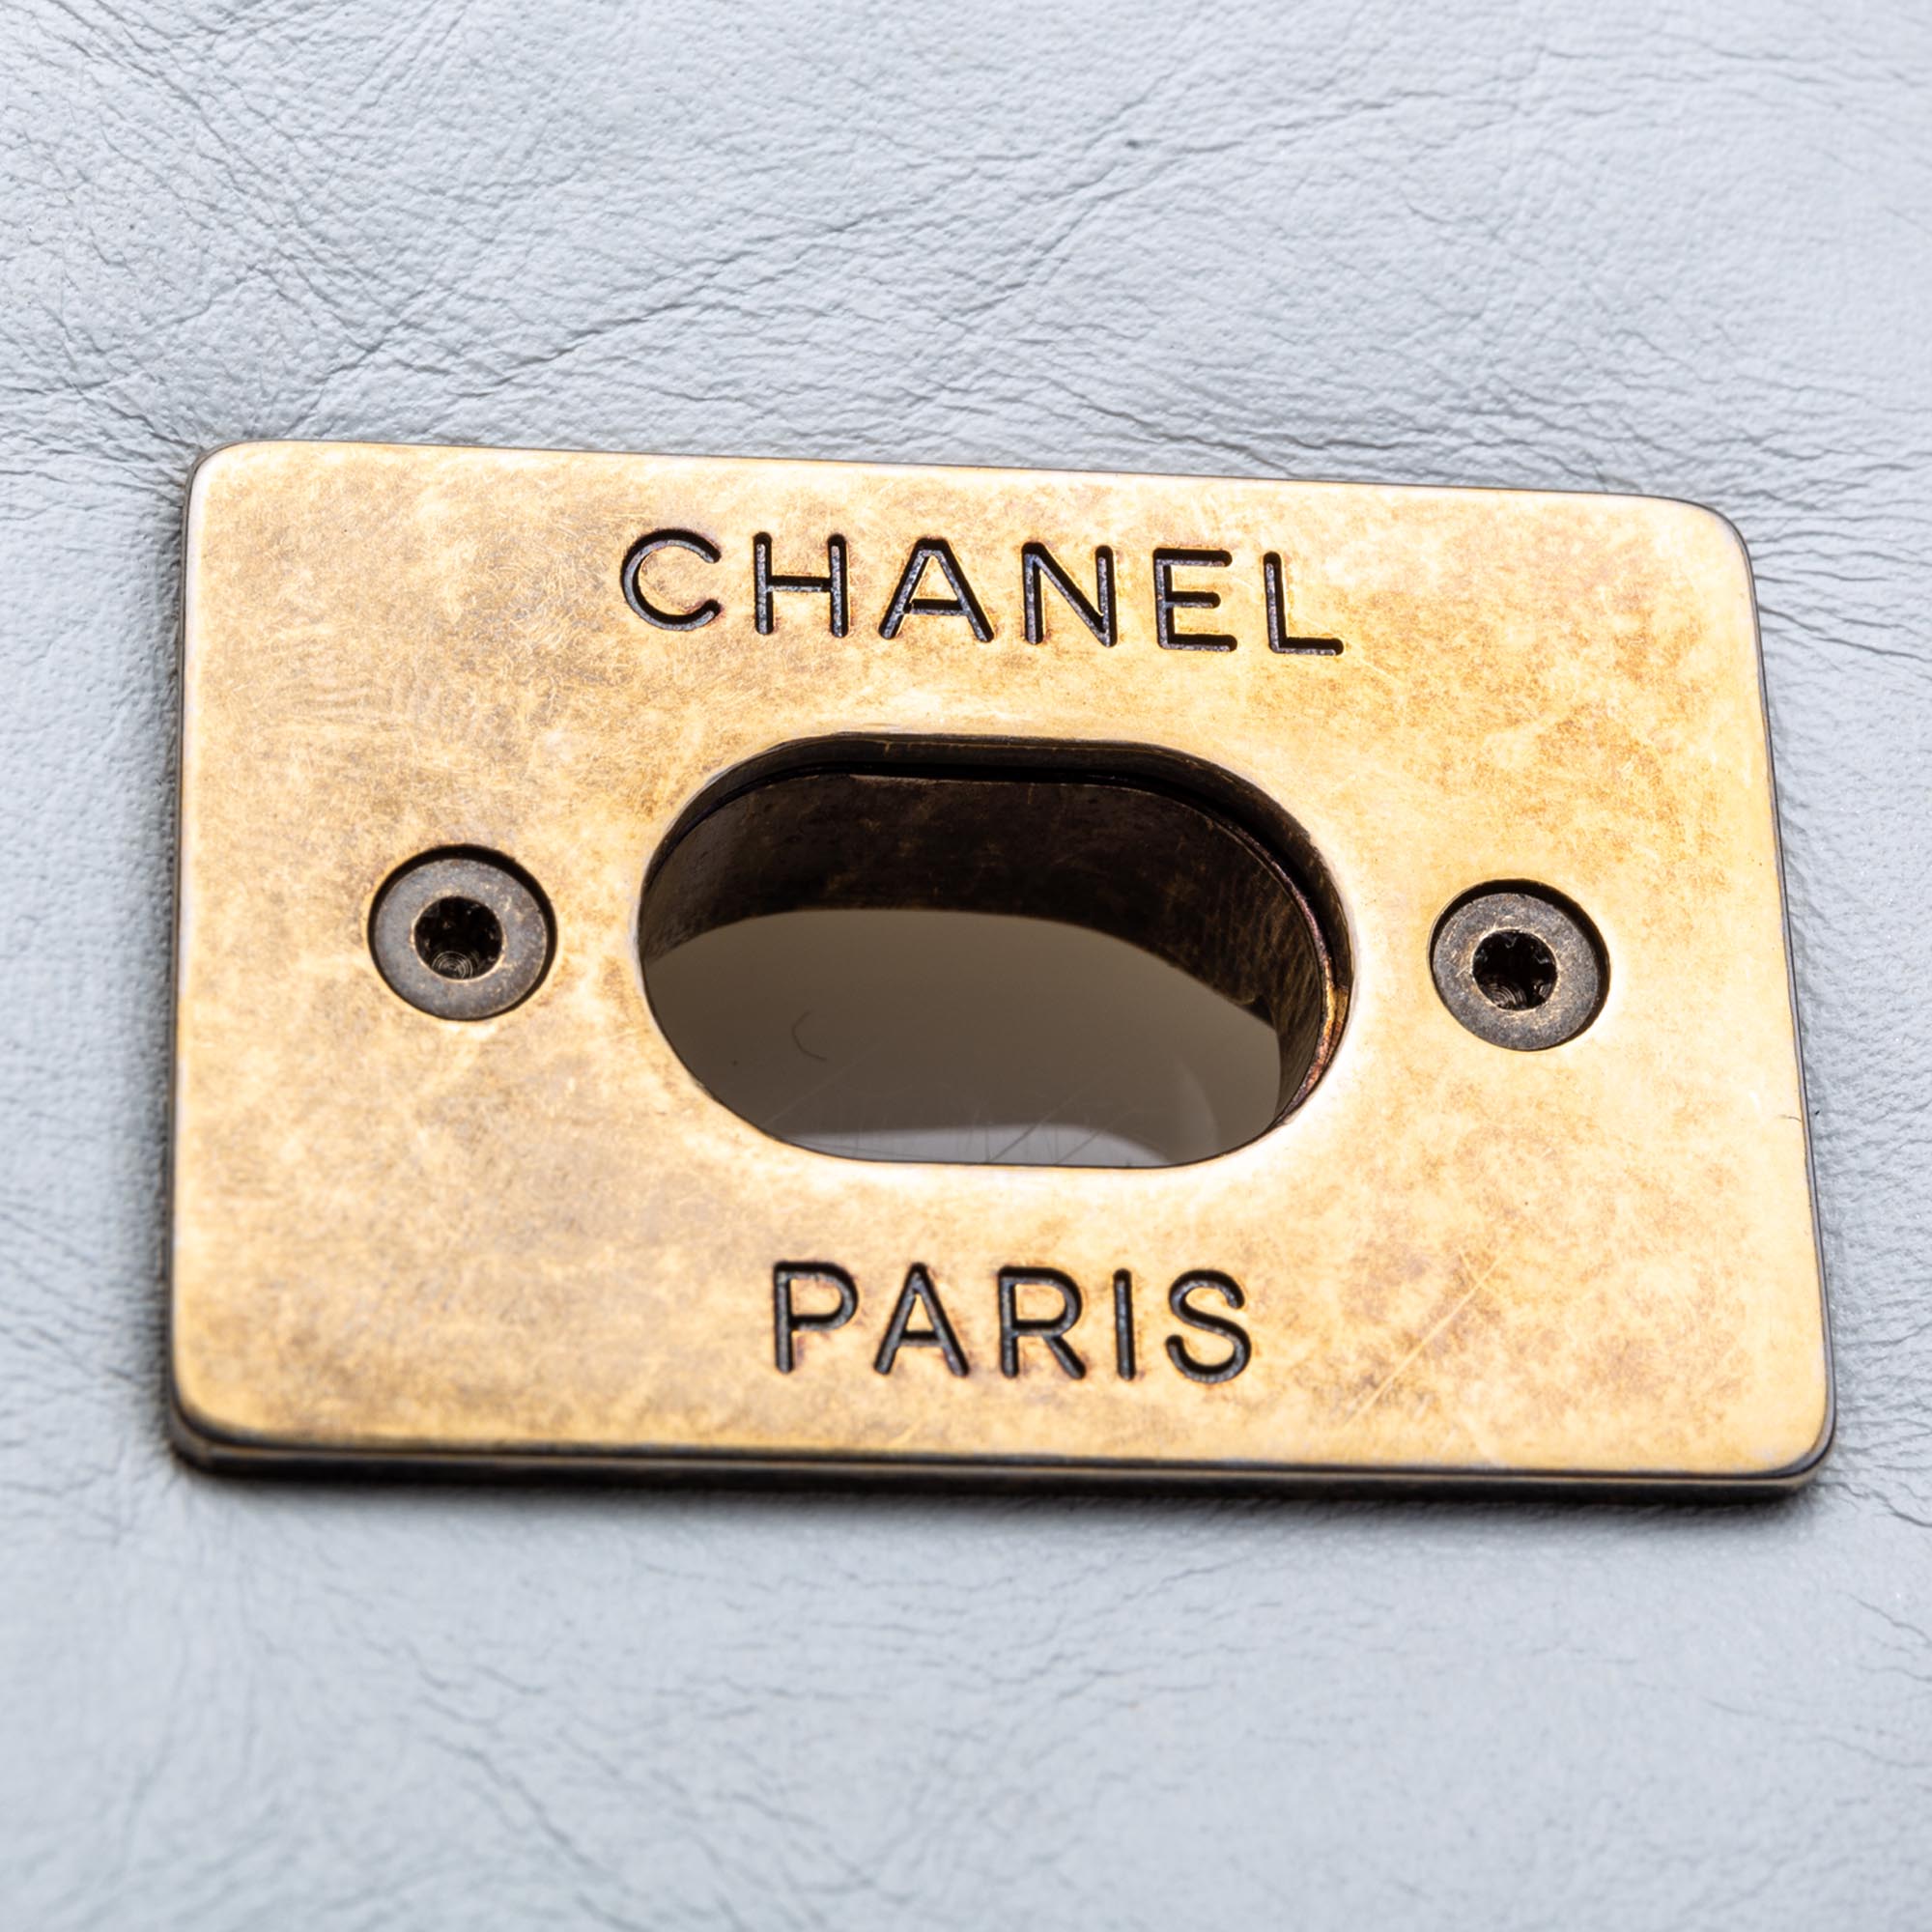 Chanel Paris-Bombay Pondichery Flap Bag - Image 5 of 10